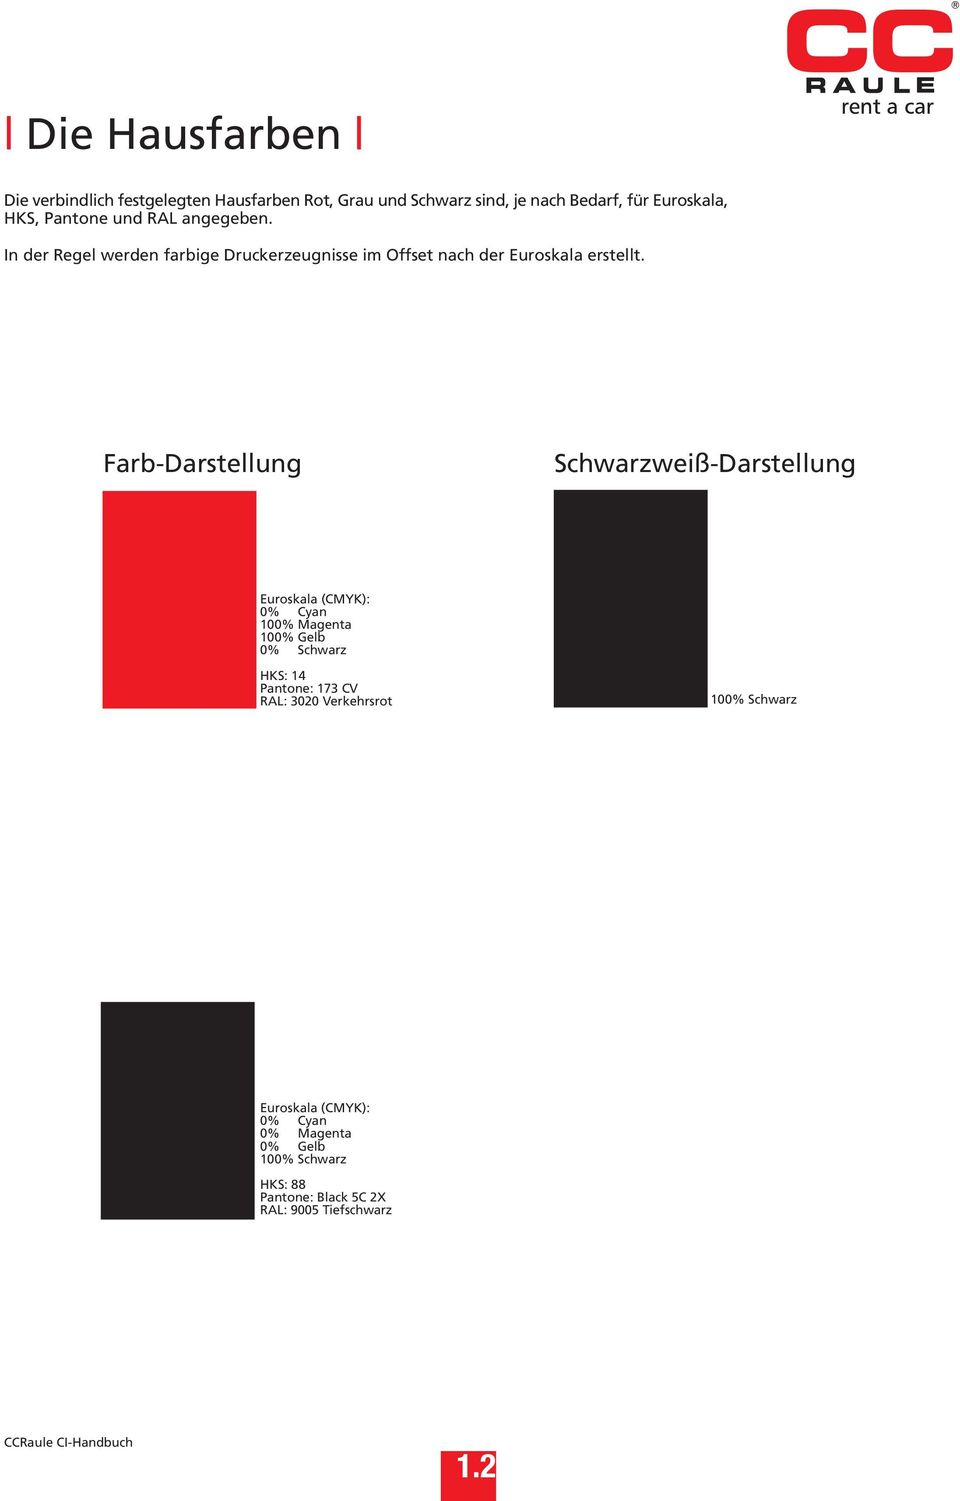 Farb-Darstellung Schwarzweiß-Darstellung Euroskala (CMYK): 0% Cyan 100% Magenta 100% Gelb 0% Schwarz HKS: 14 Pantone: 173 CV